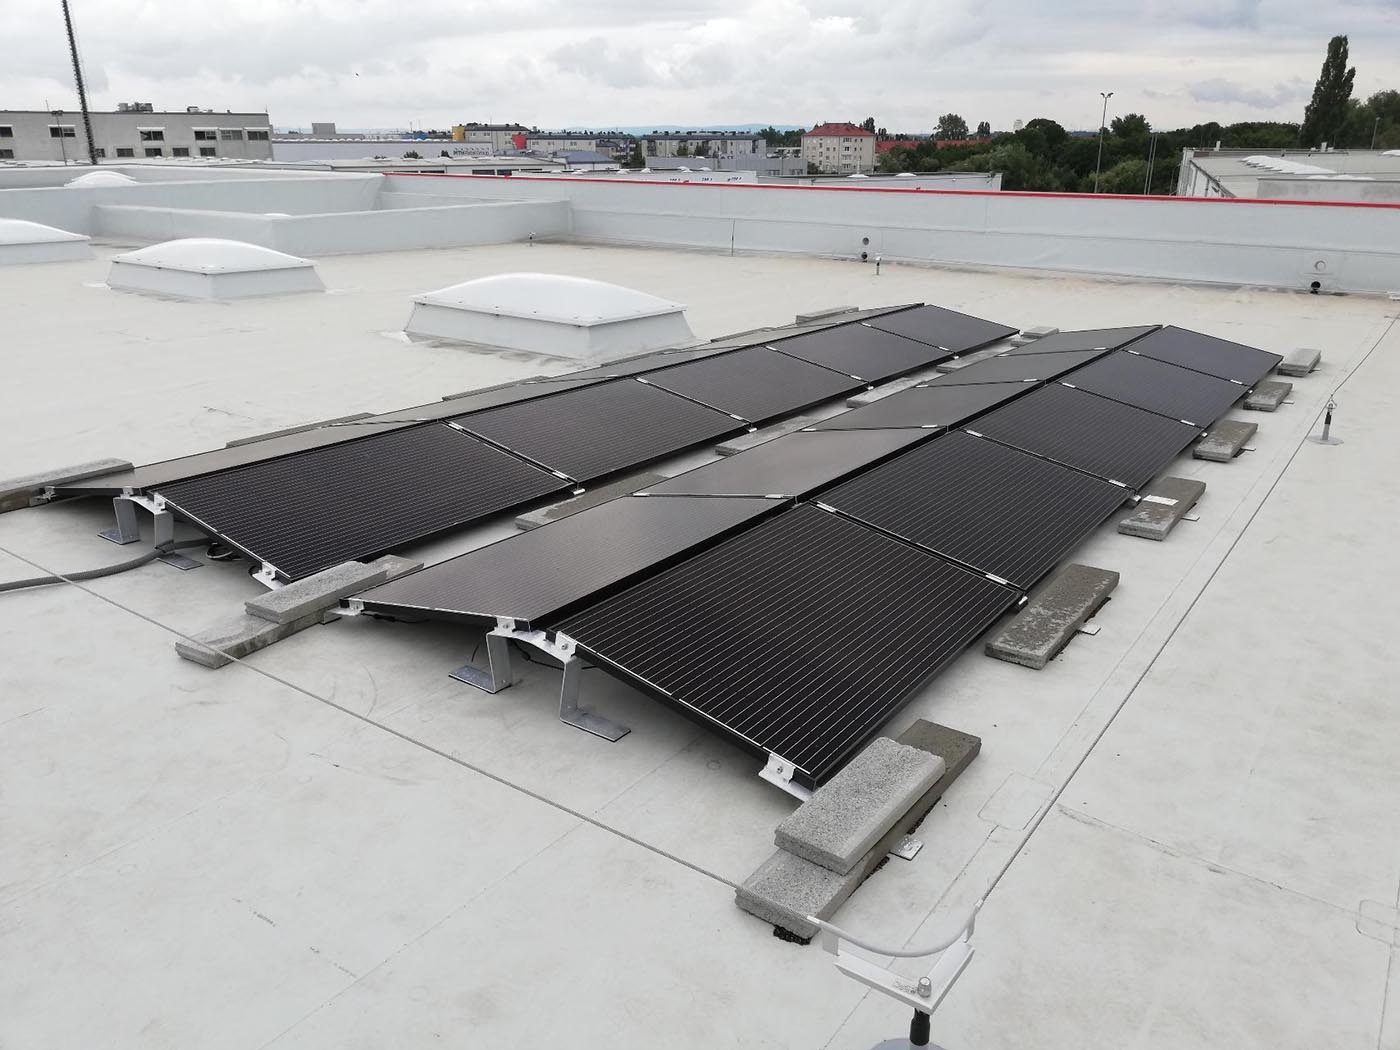 Grid-tie-vedlikeholdsmetode for solenergisystem-systemvedlikehold: